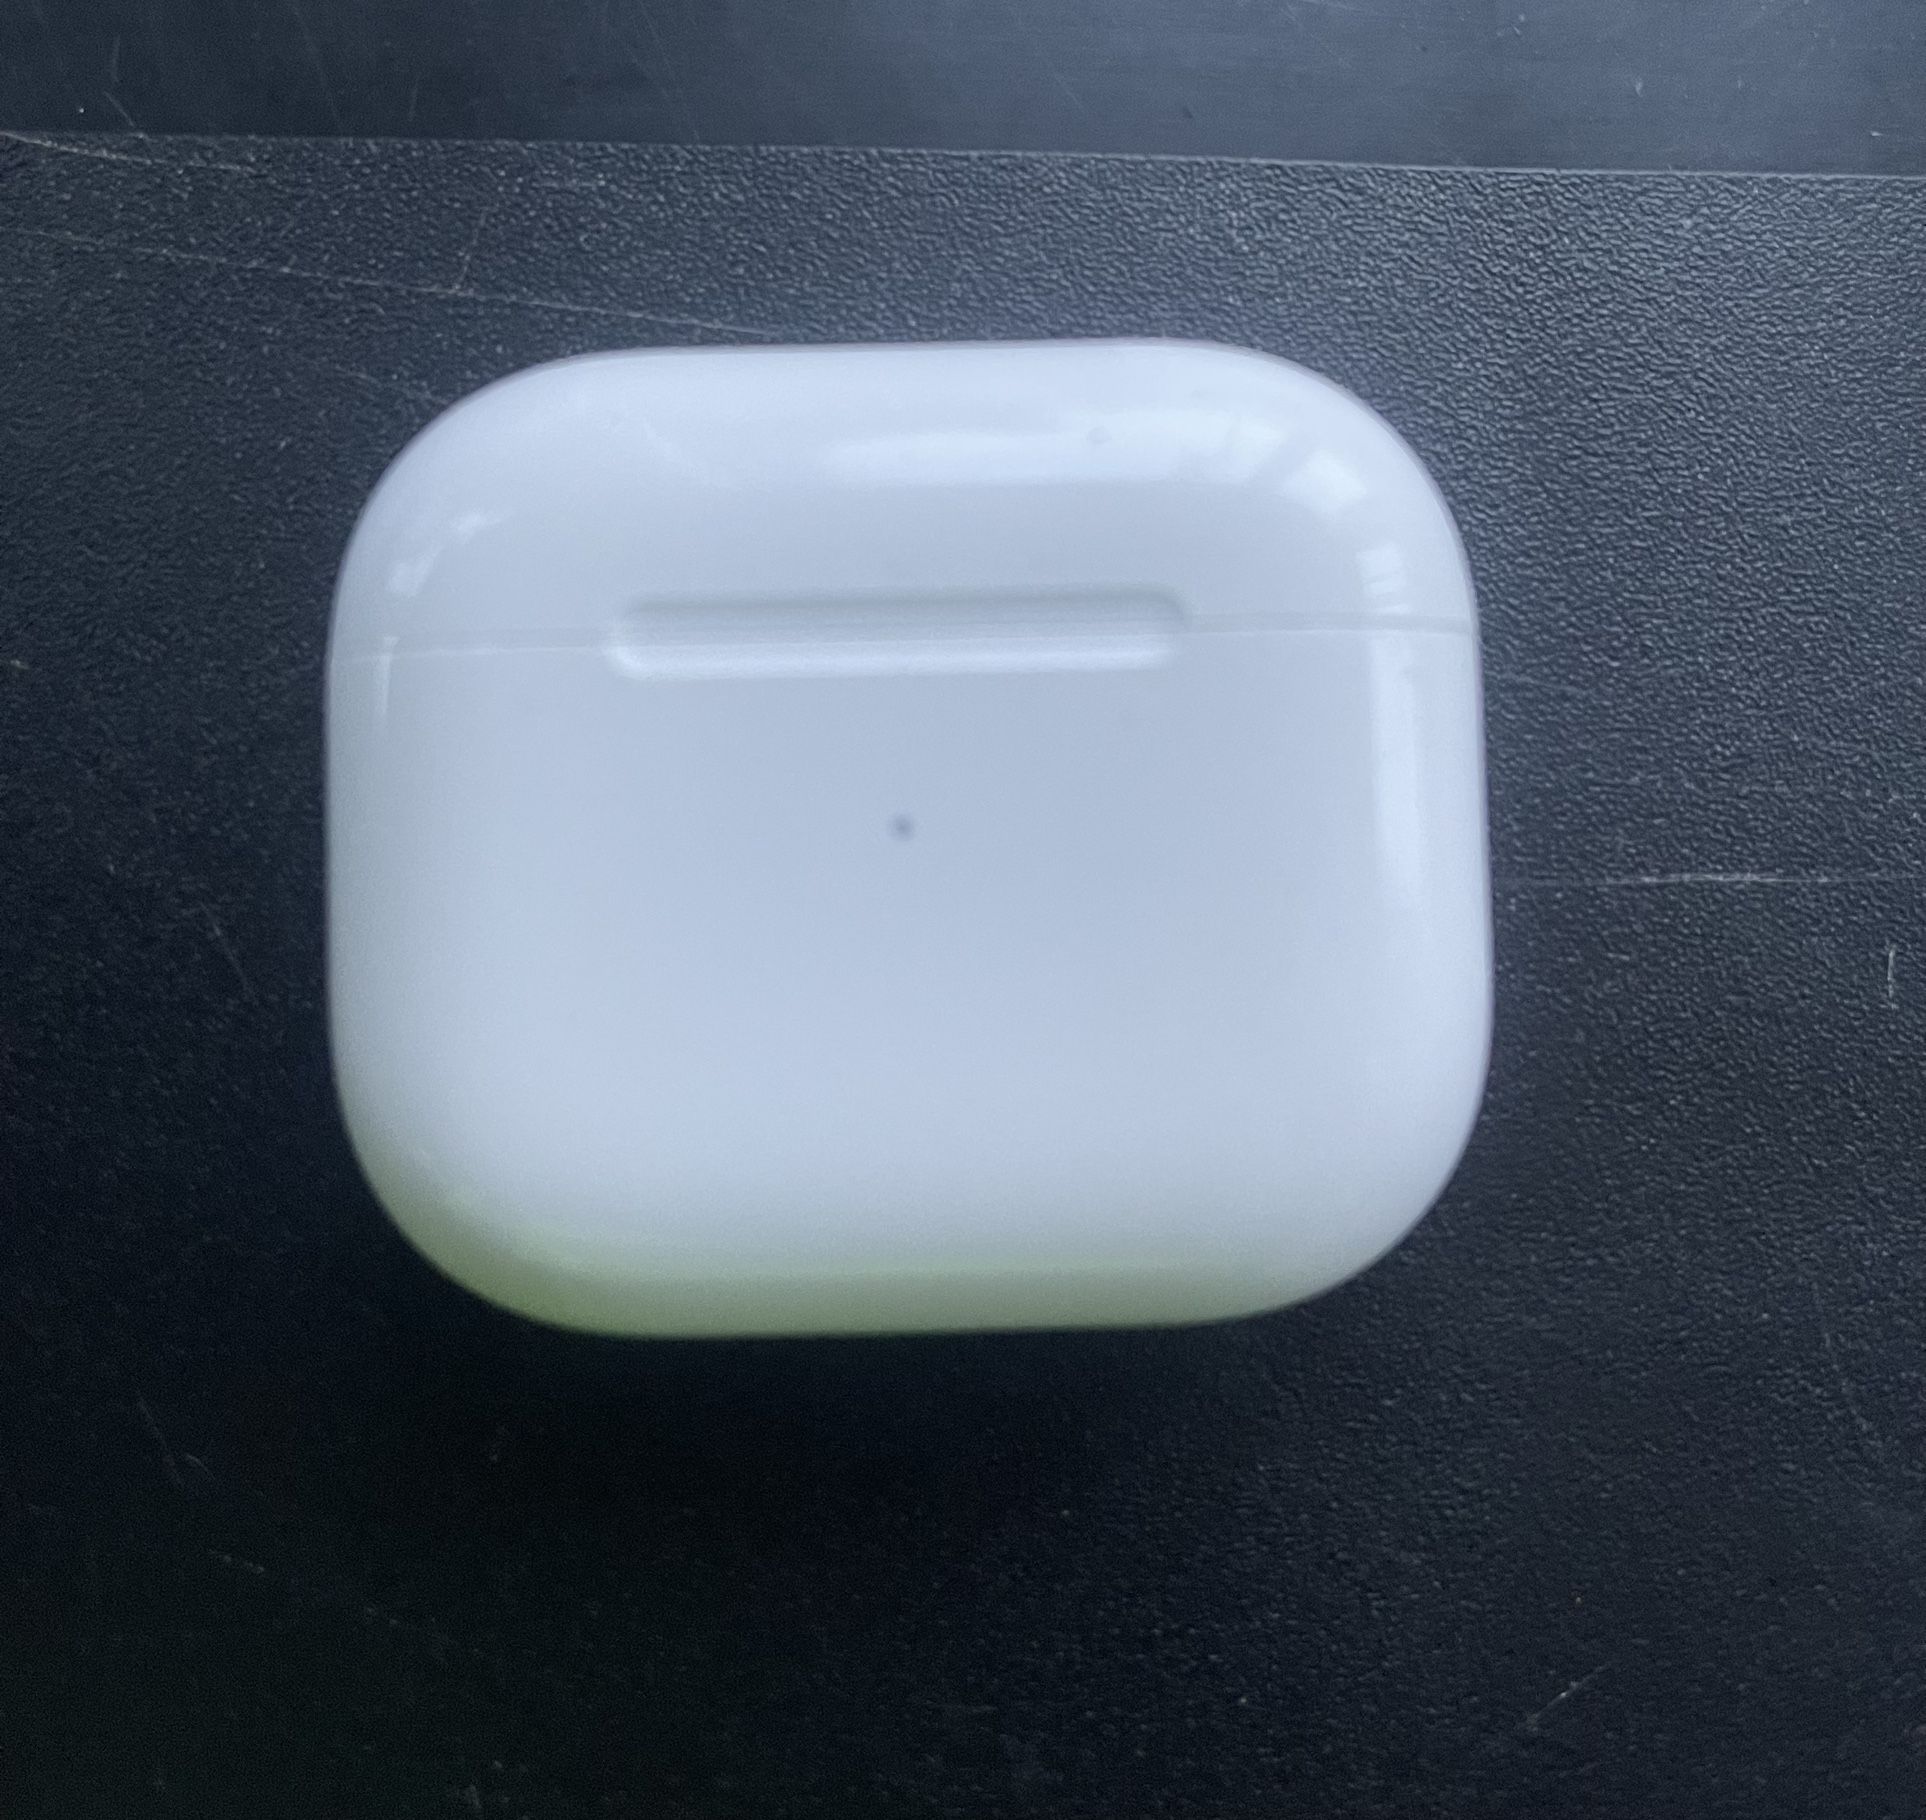 Apple Airpods 3rd Gen Charging Case